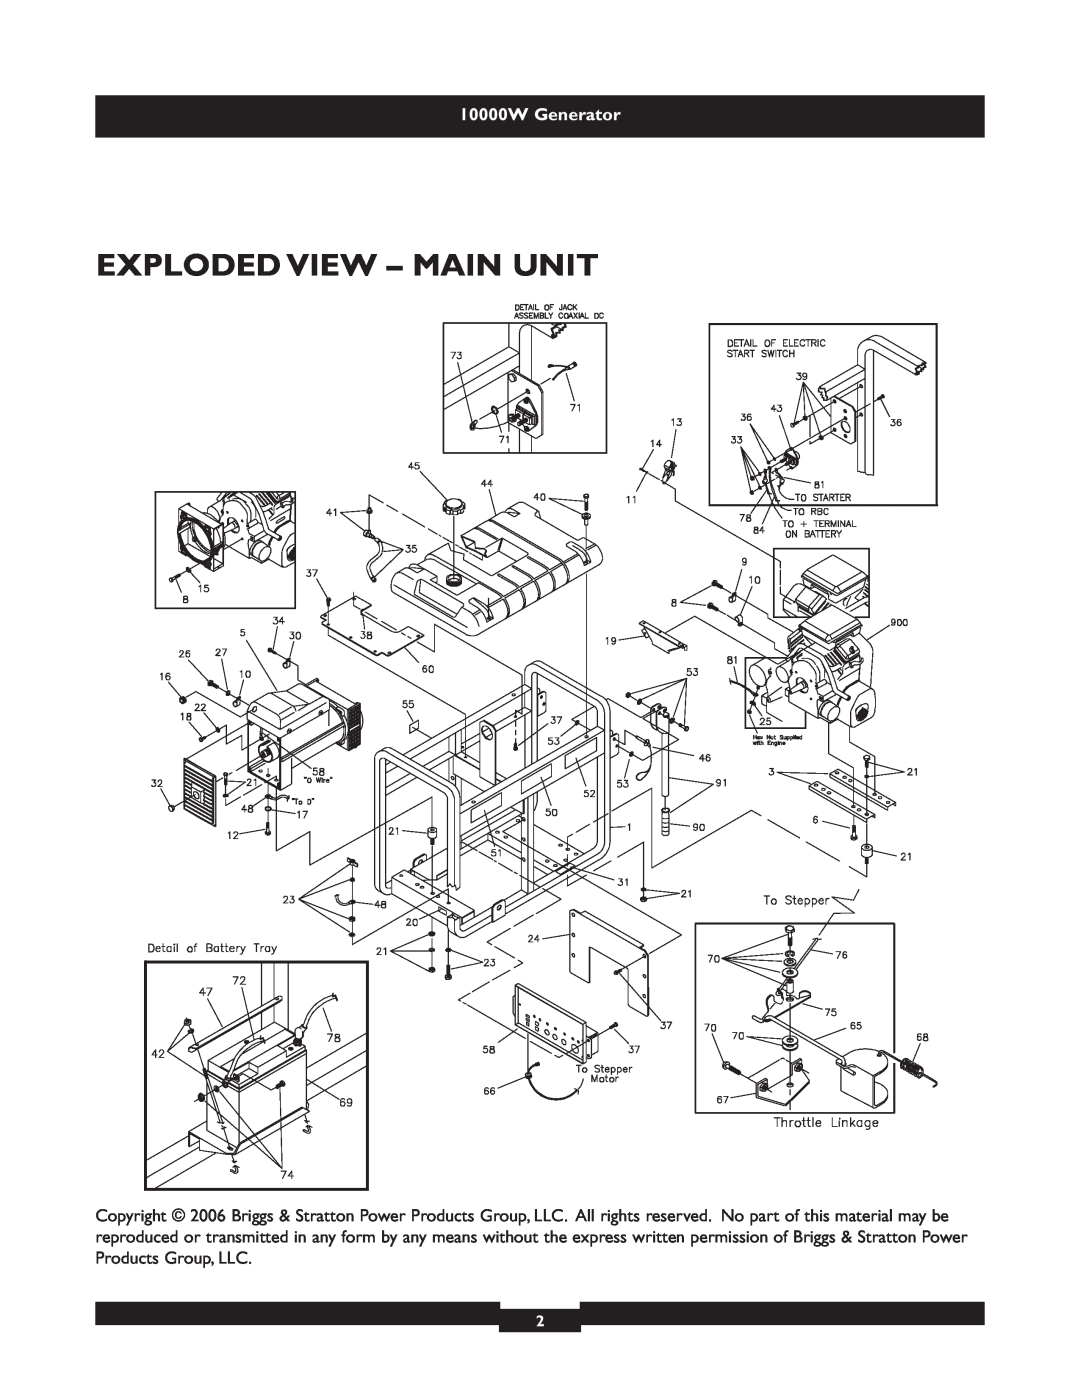 Briggs & Stratton 9801 manual Exploded View - Main Unit, 10000W Generator 